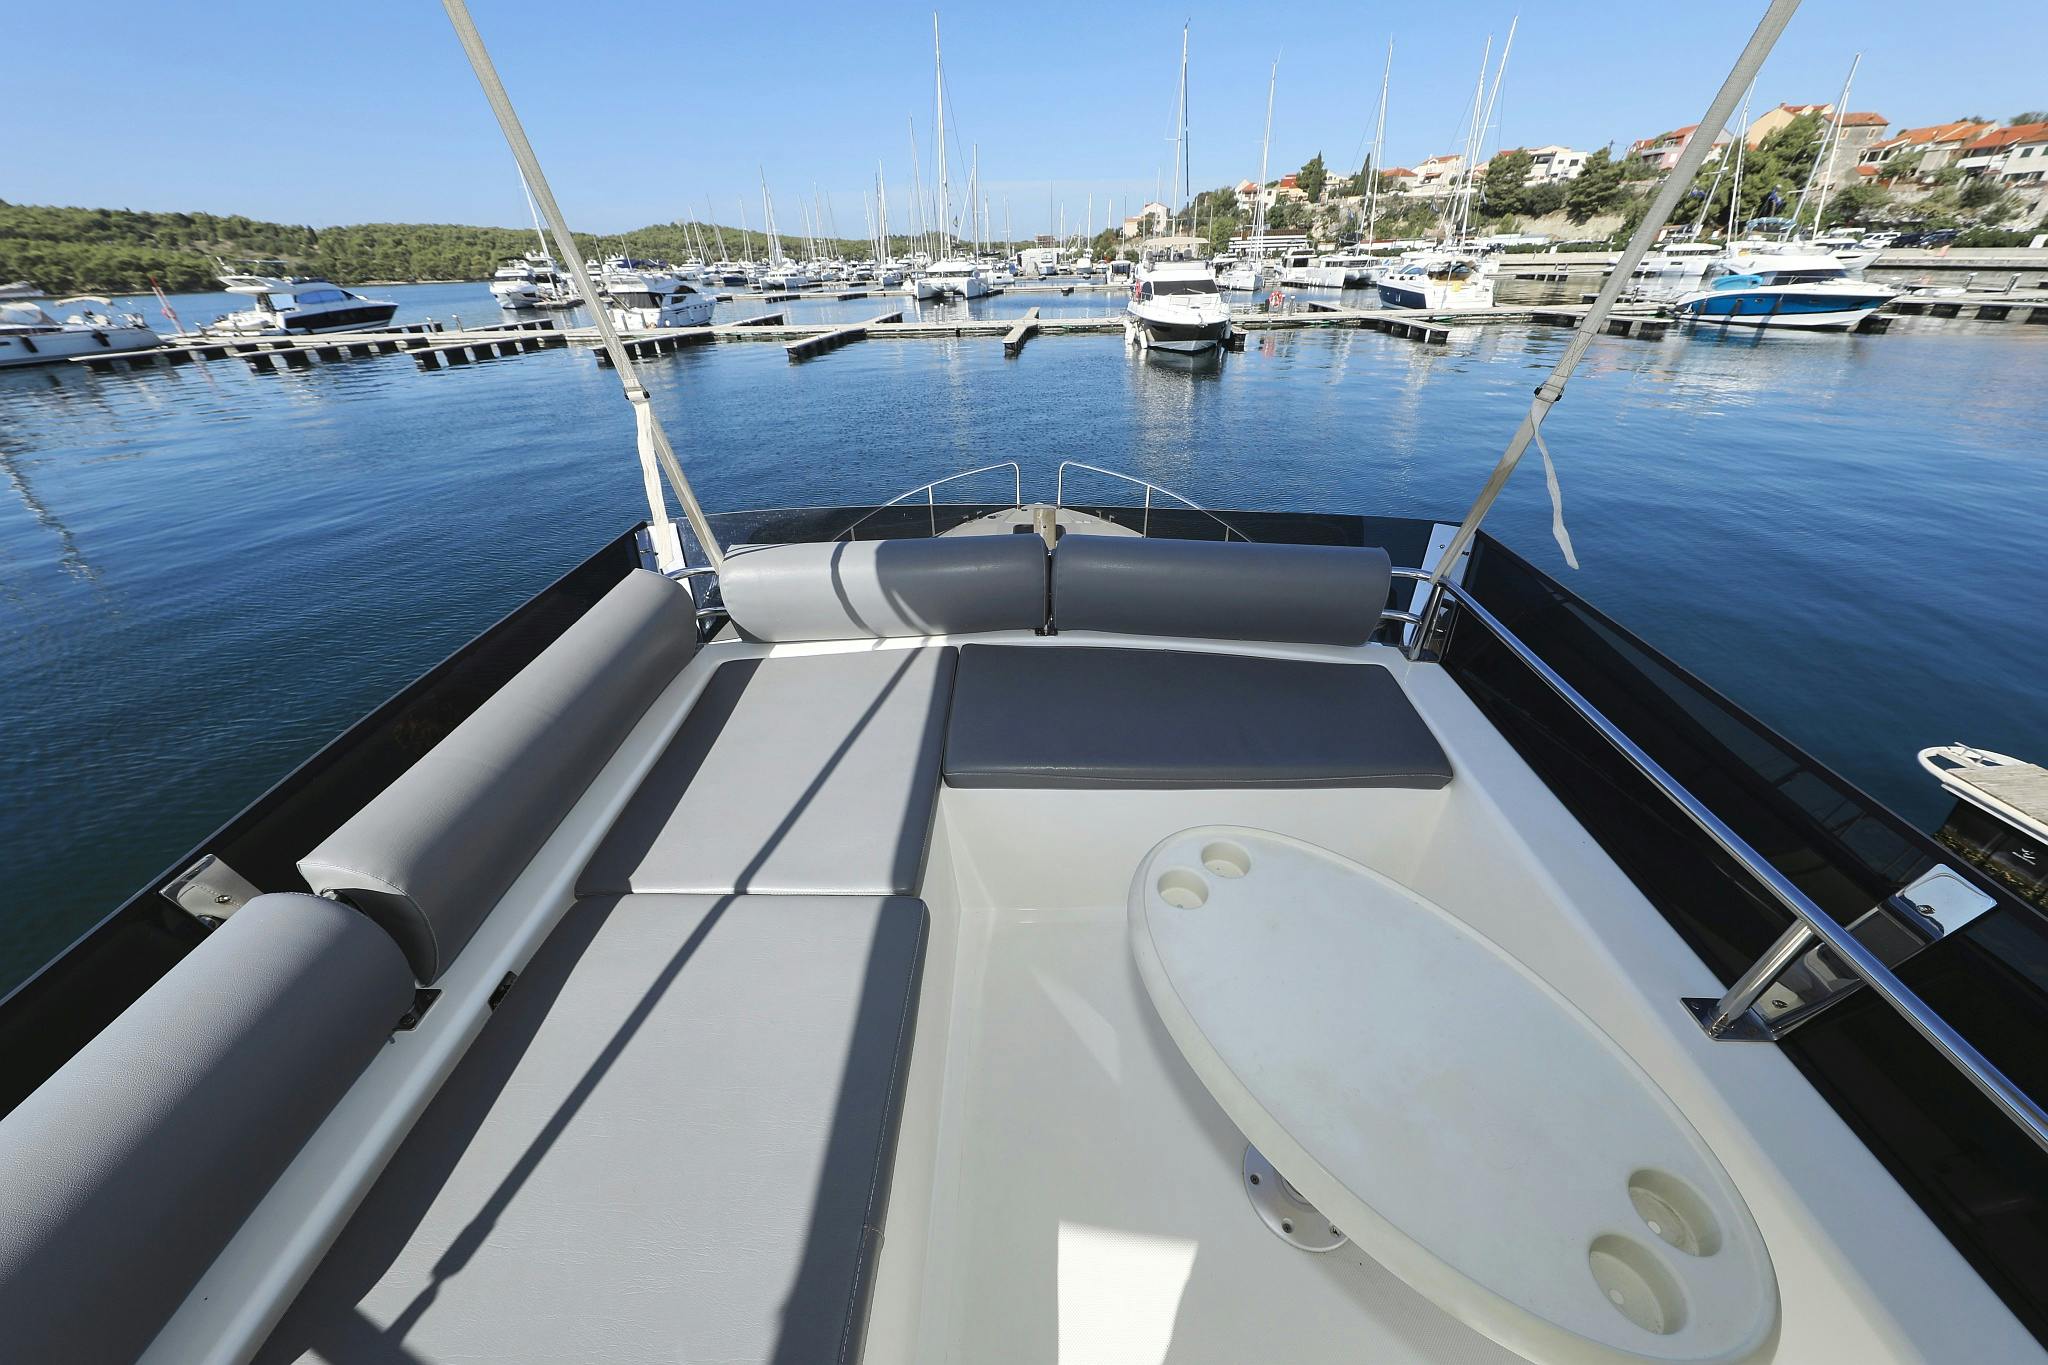 Book Futura 40 Grand Horizon Motor yacht for bareboat charter in Marina Mandalina, Sibenik, Šibenik region, Croatia with TripYacht!, picture 10